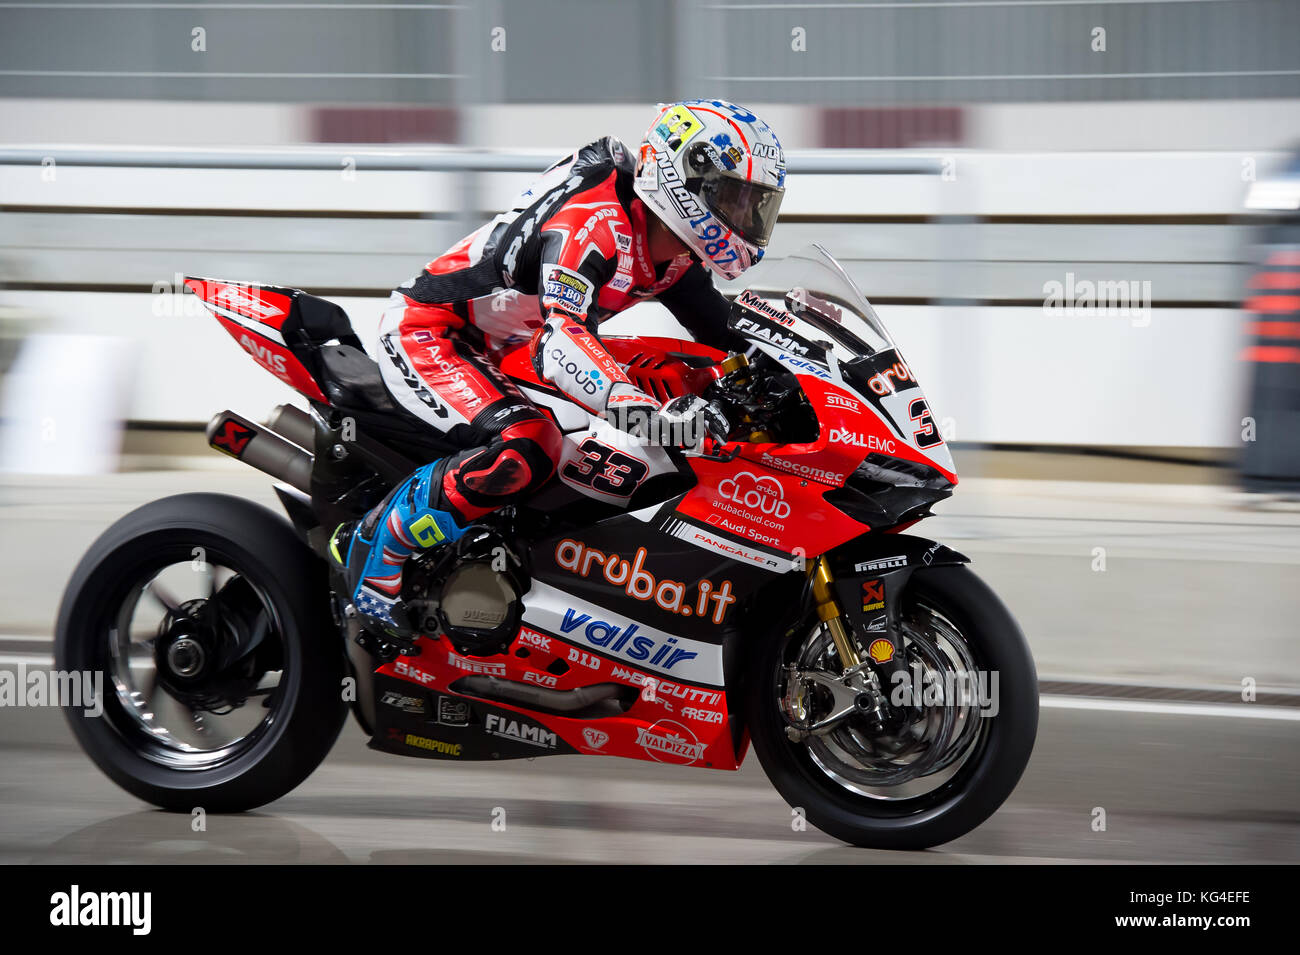 3rd November 2017, Losail Circuit, Qatar. Marco Melandri who rides Ducati  during WSBK Superpole Stock Photo - Alamy